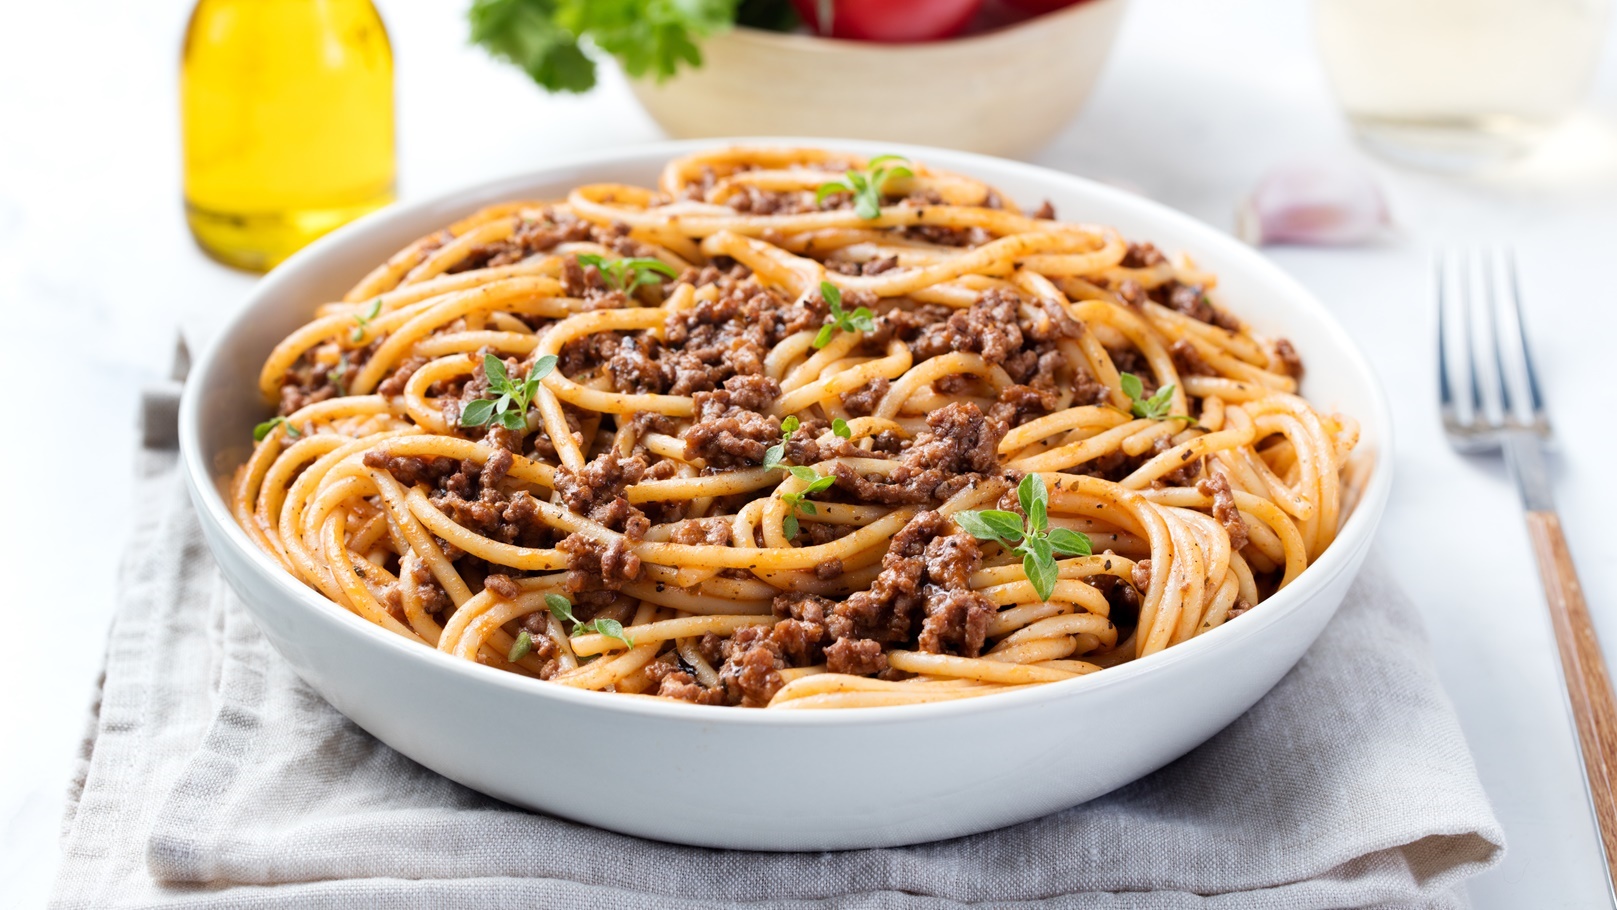 spaghetti-bolognese-with-cheese-and-basil-2021-08-26-16-29-51-utc